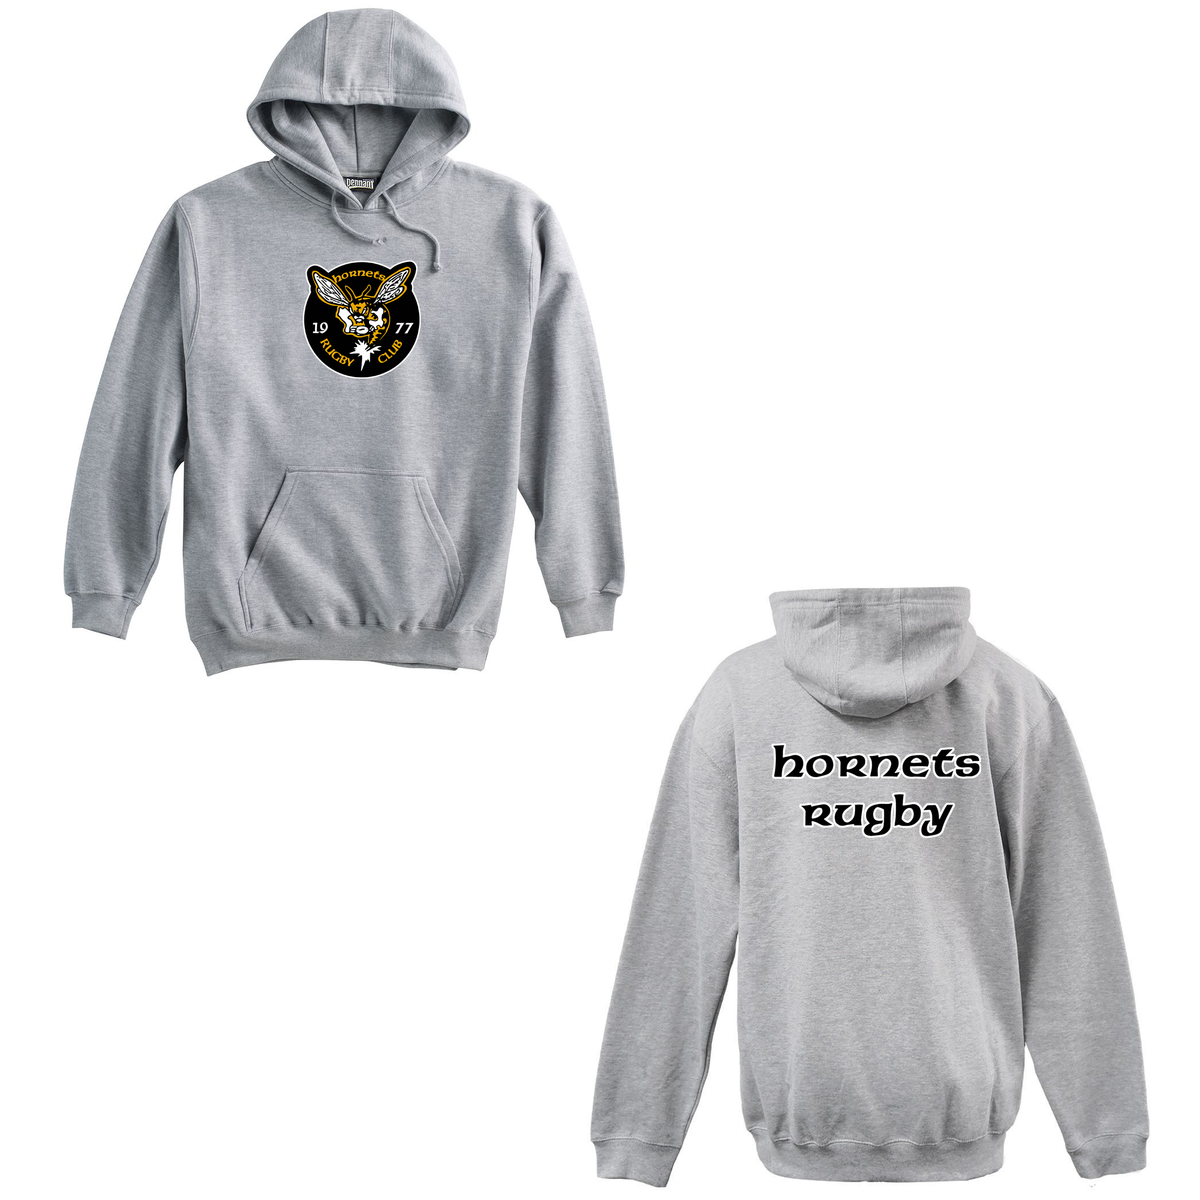 St. Louis Hornets Rugby Club Sweatshirt